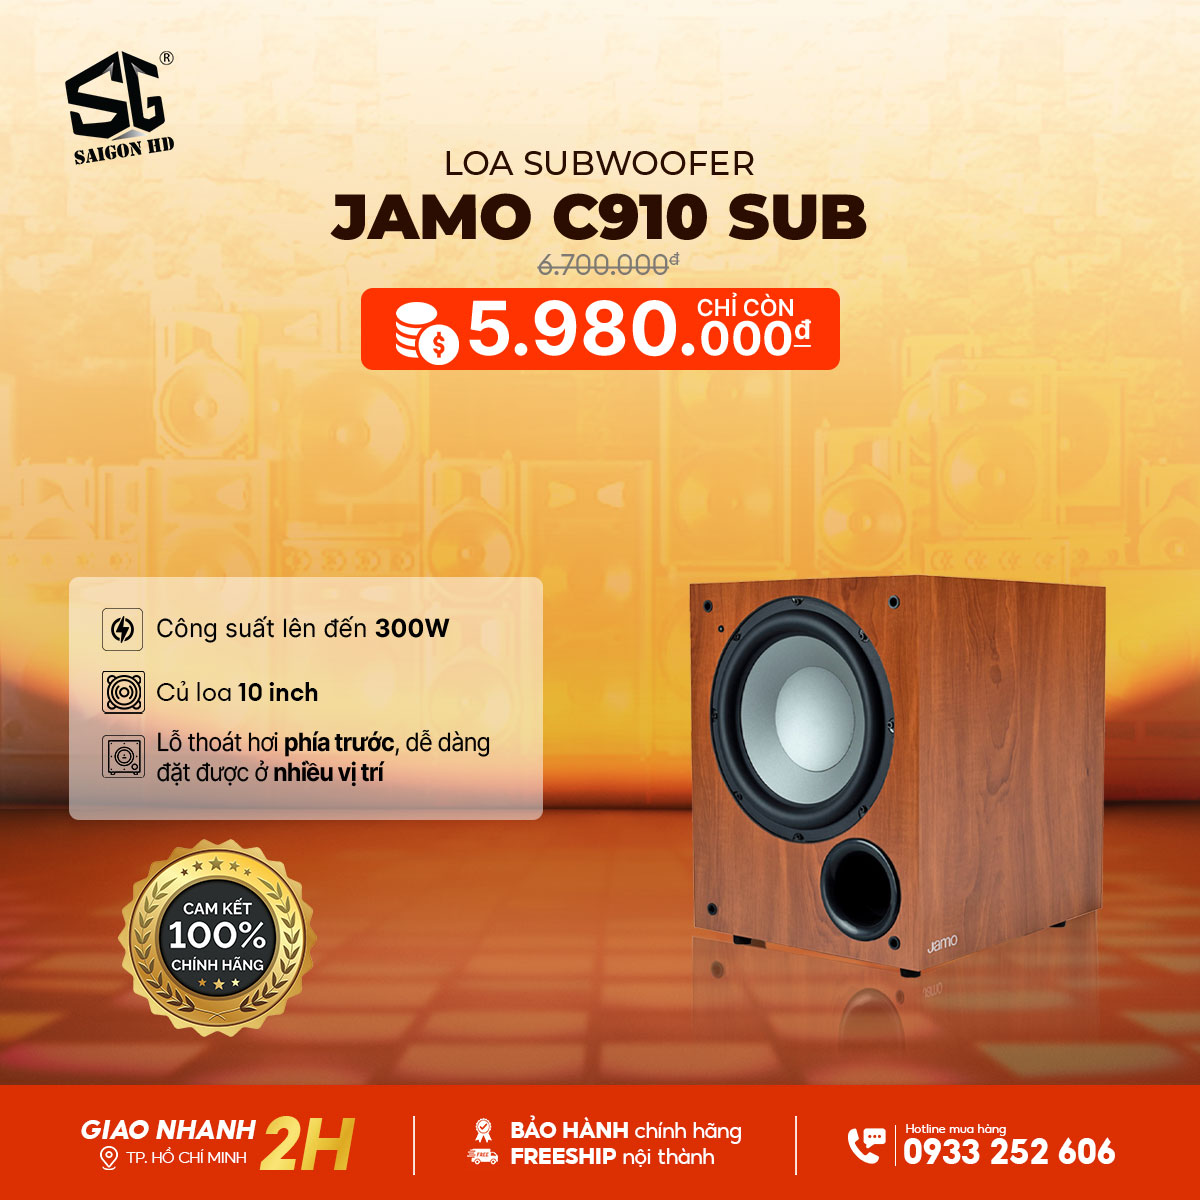 Loa Subwoofer Jamo C910 Sub